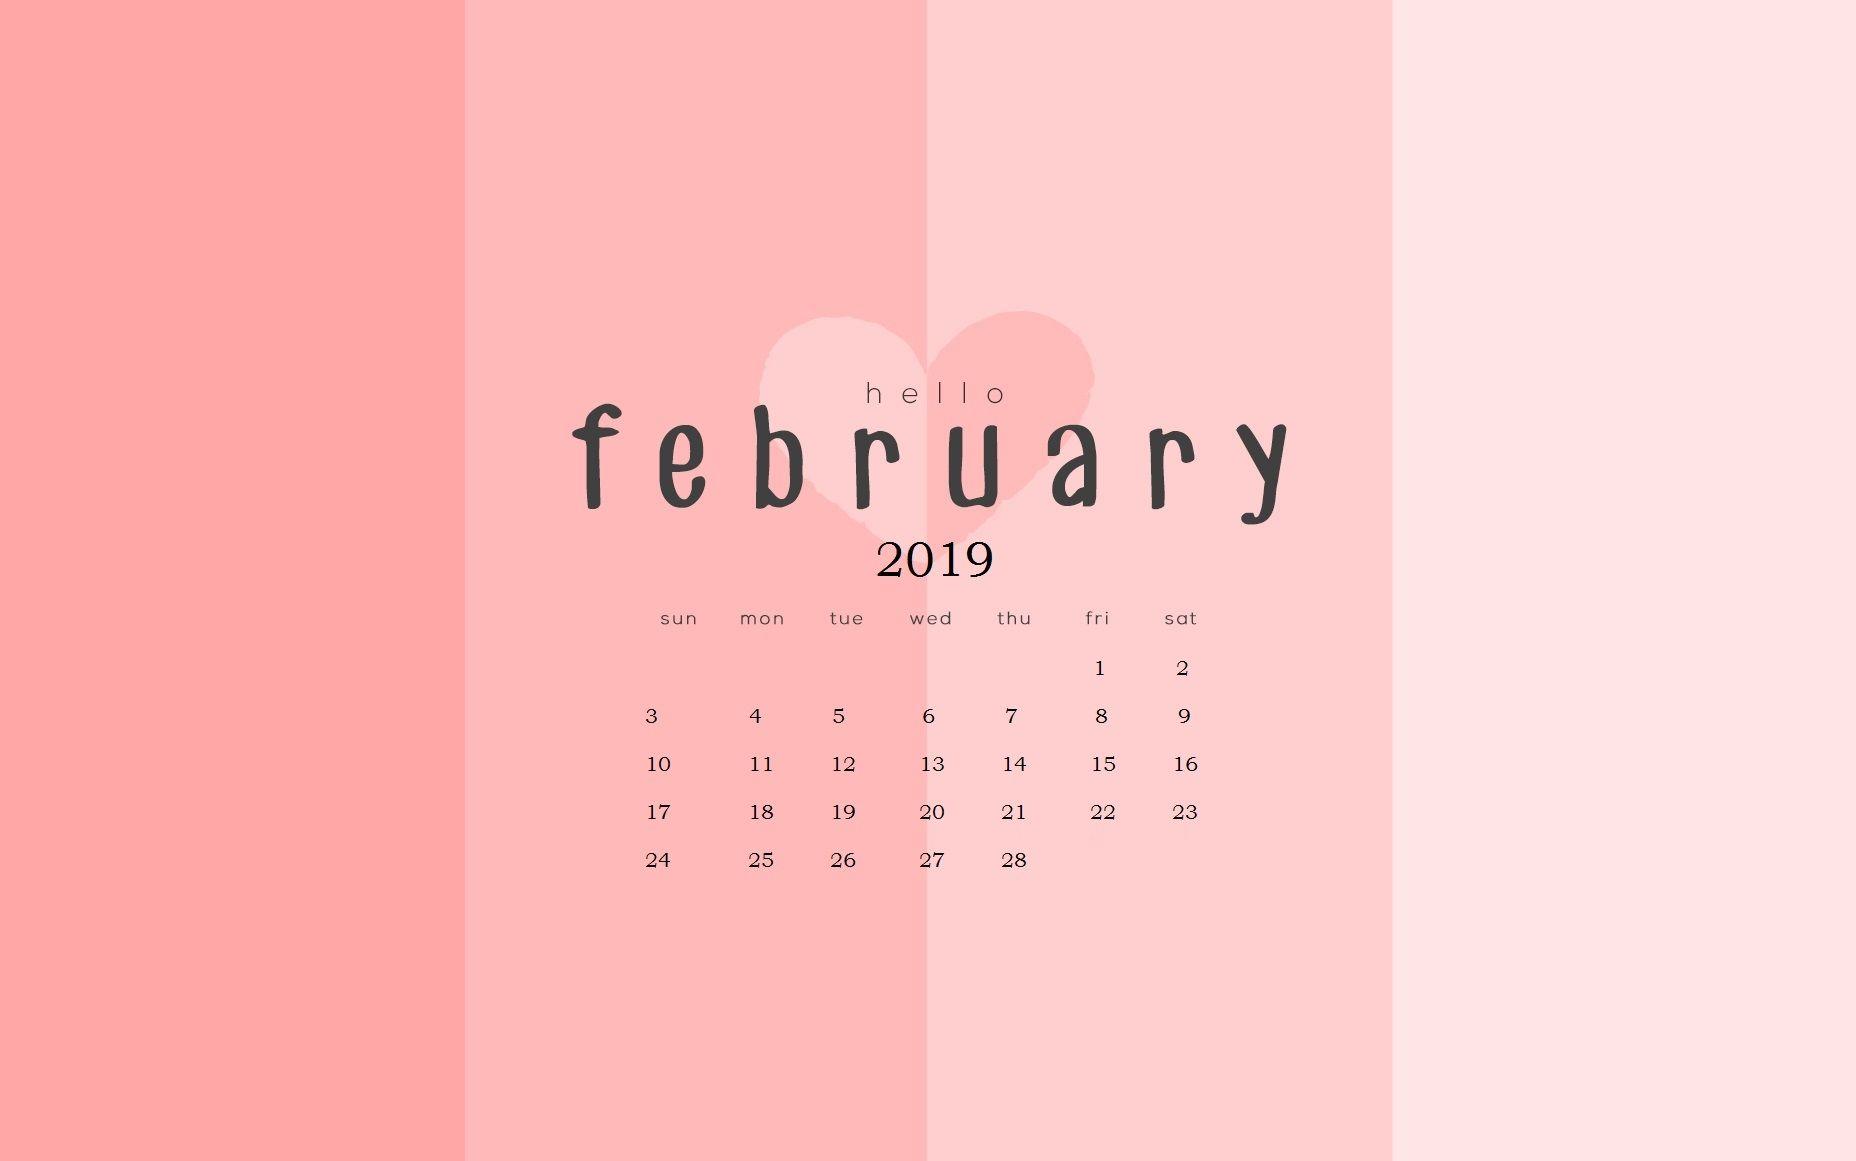 February 2019 Calendar Wallpapers - Wallpaper Cave